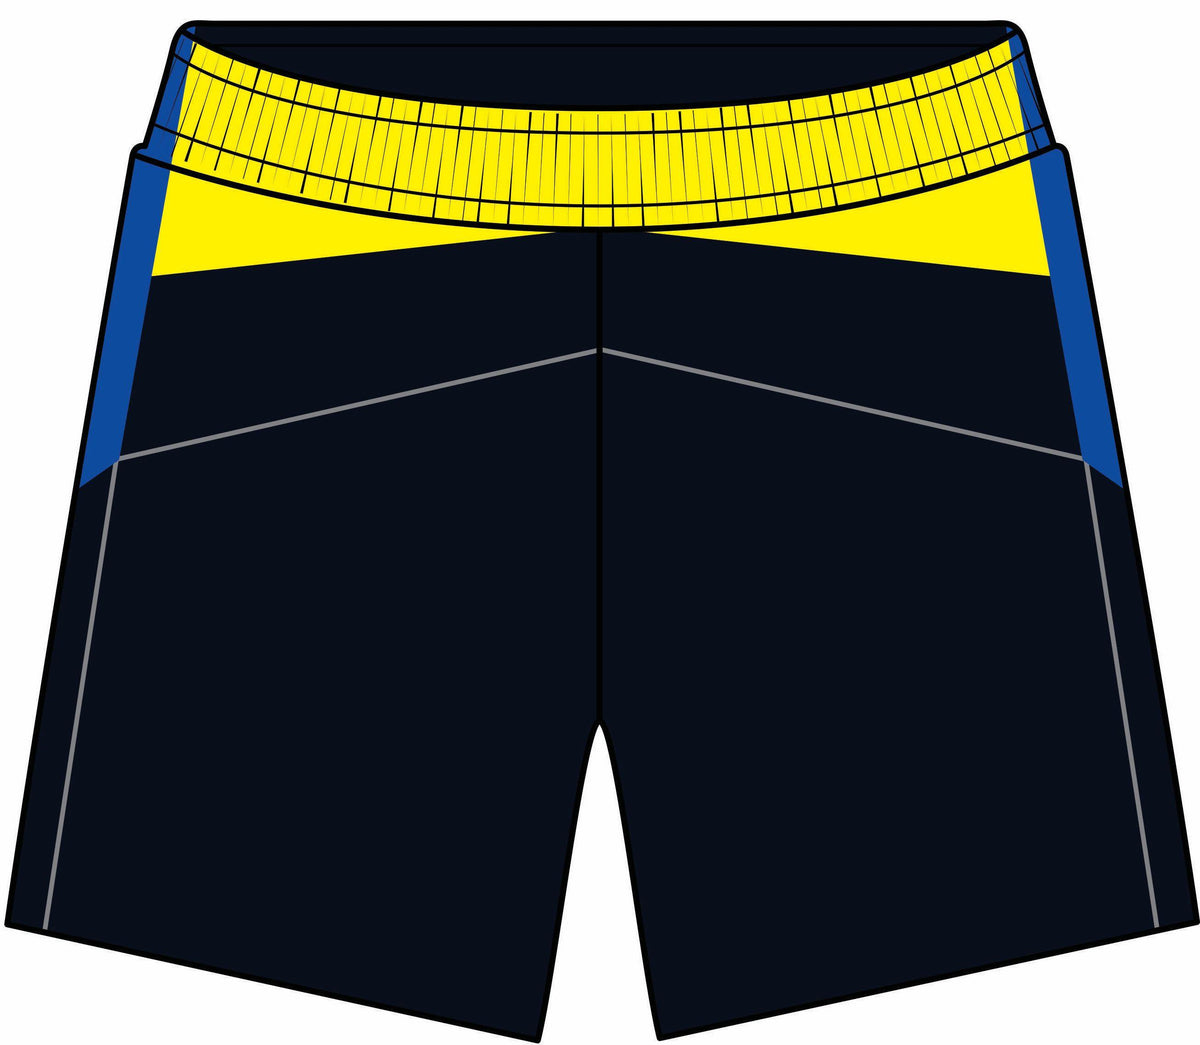 WPACT Male Shorts (Compulsory)